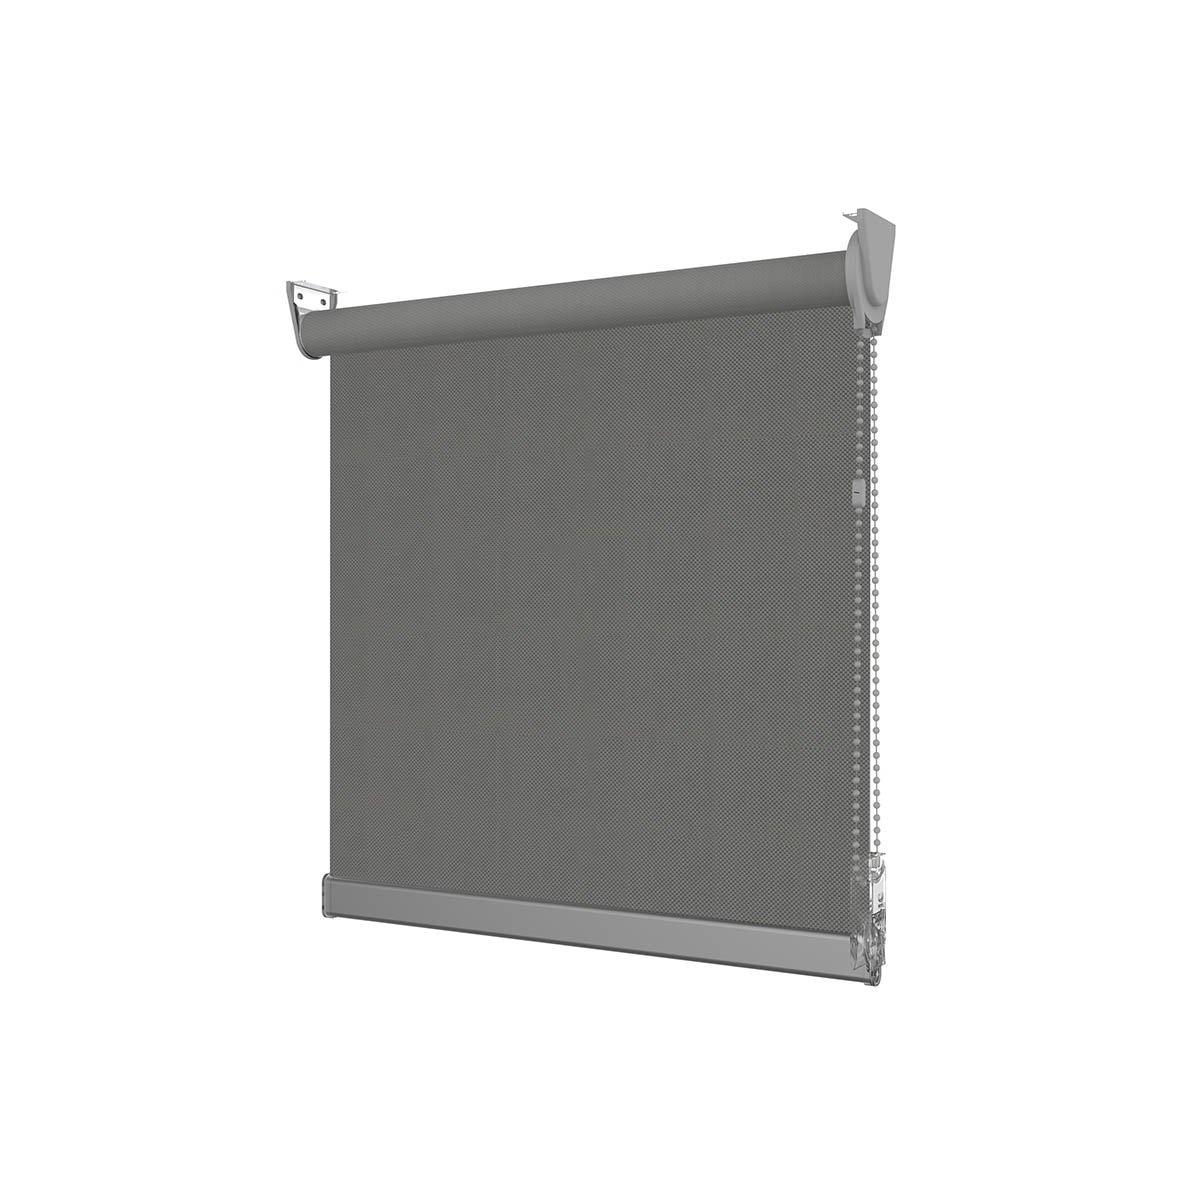 Persiana Enrollable Translucida Screen Phifer 4500 New 1.00 X 2.50 Granite Classic